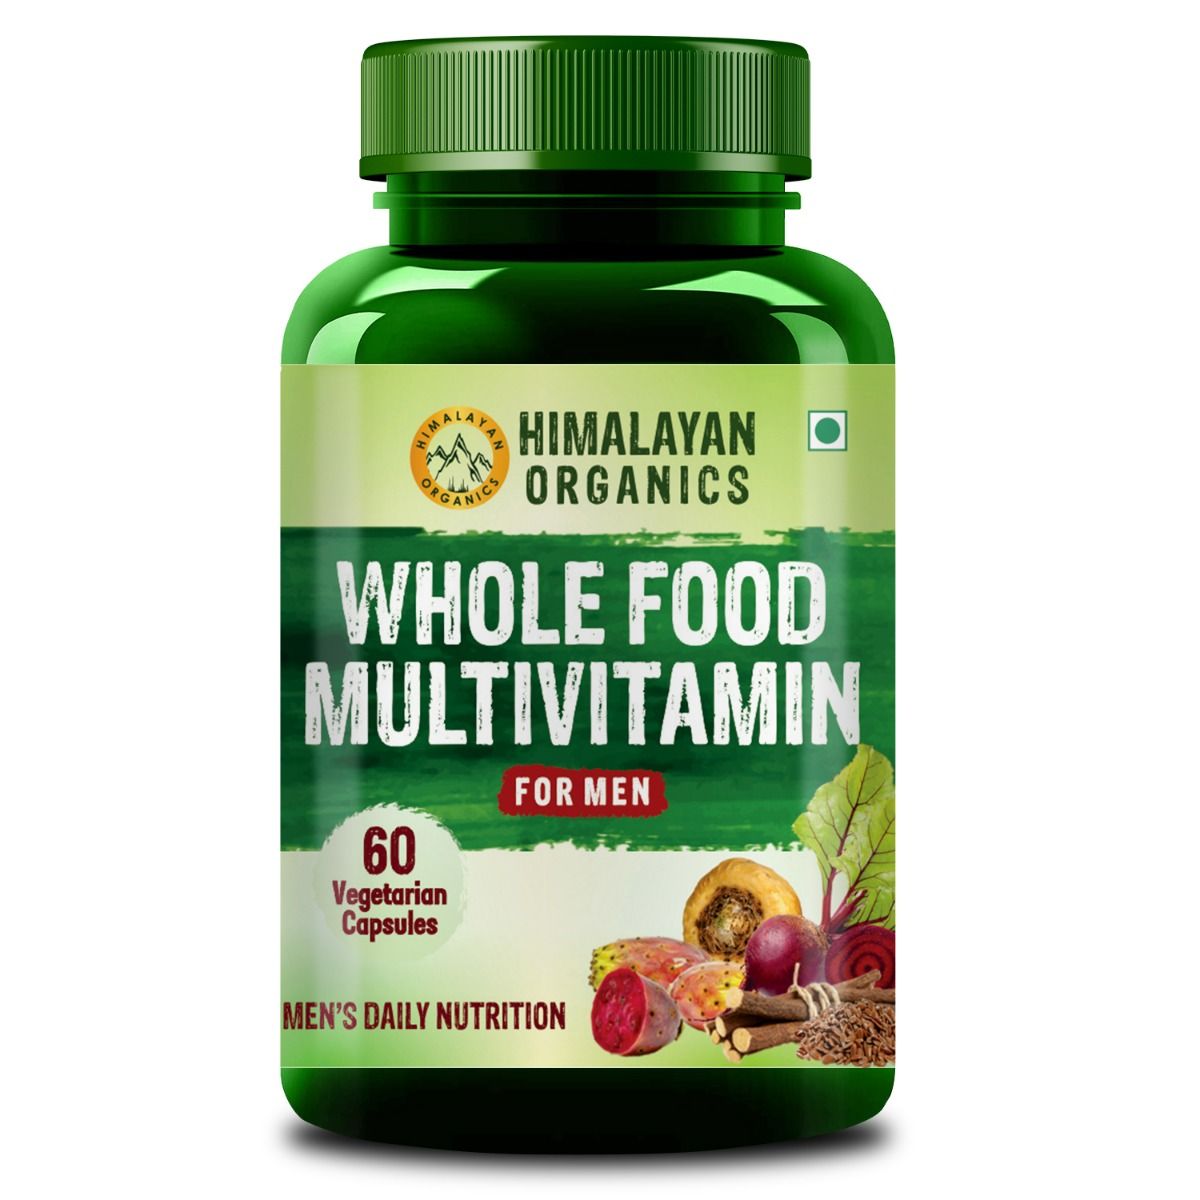 Buy Himalayan Organics Whole Food Multivitamin for Men, 60 Capsules Online